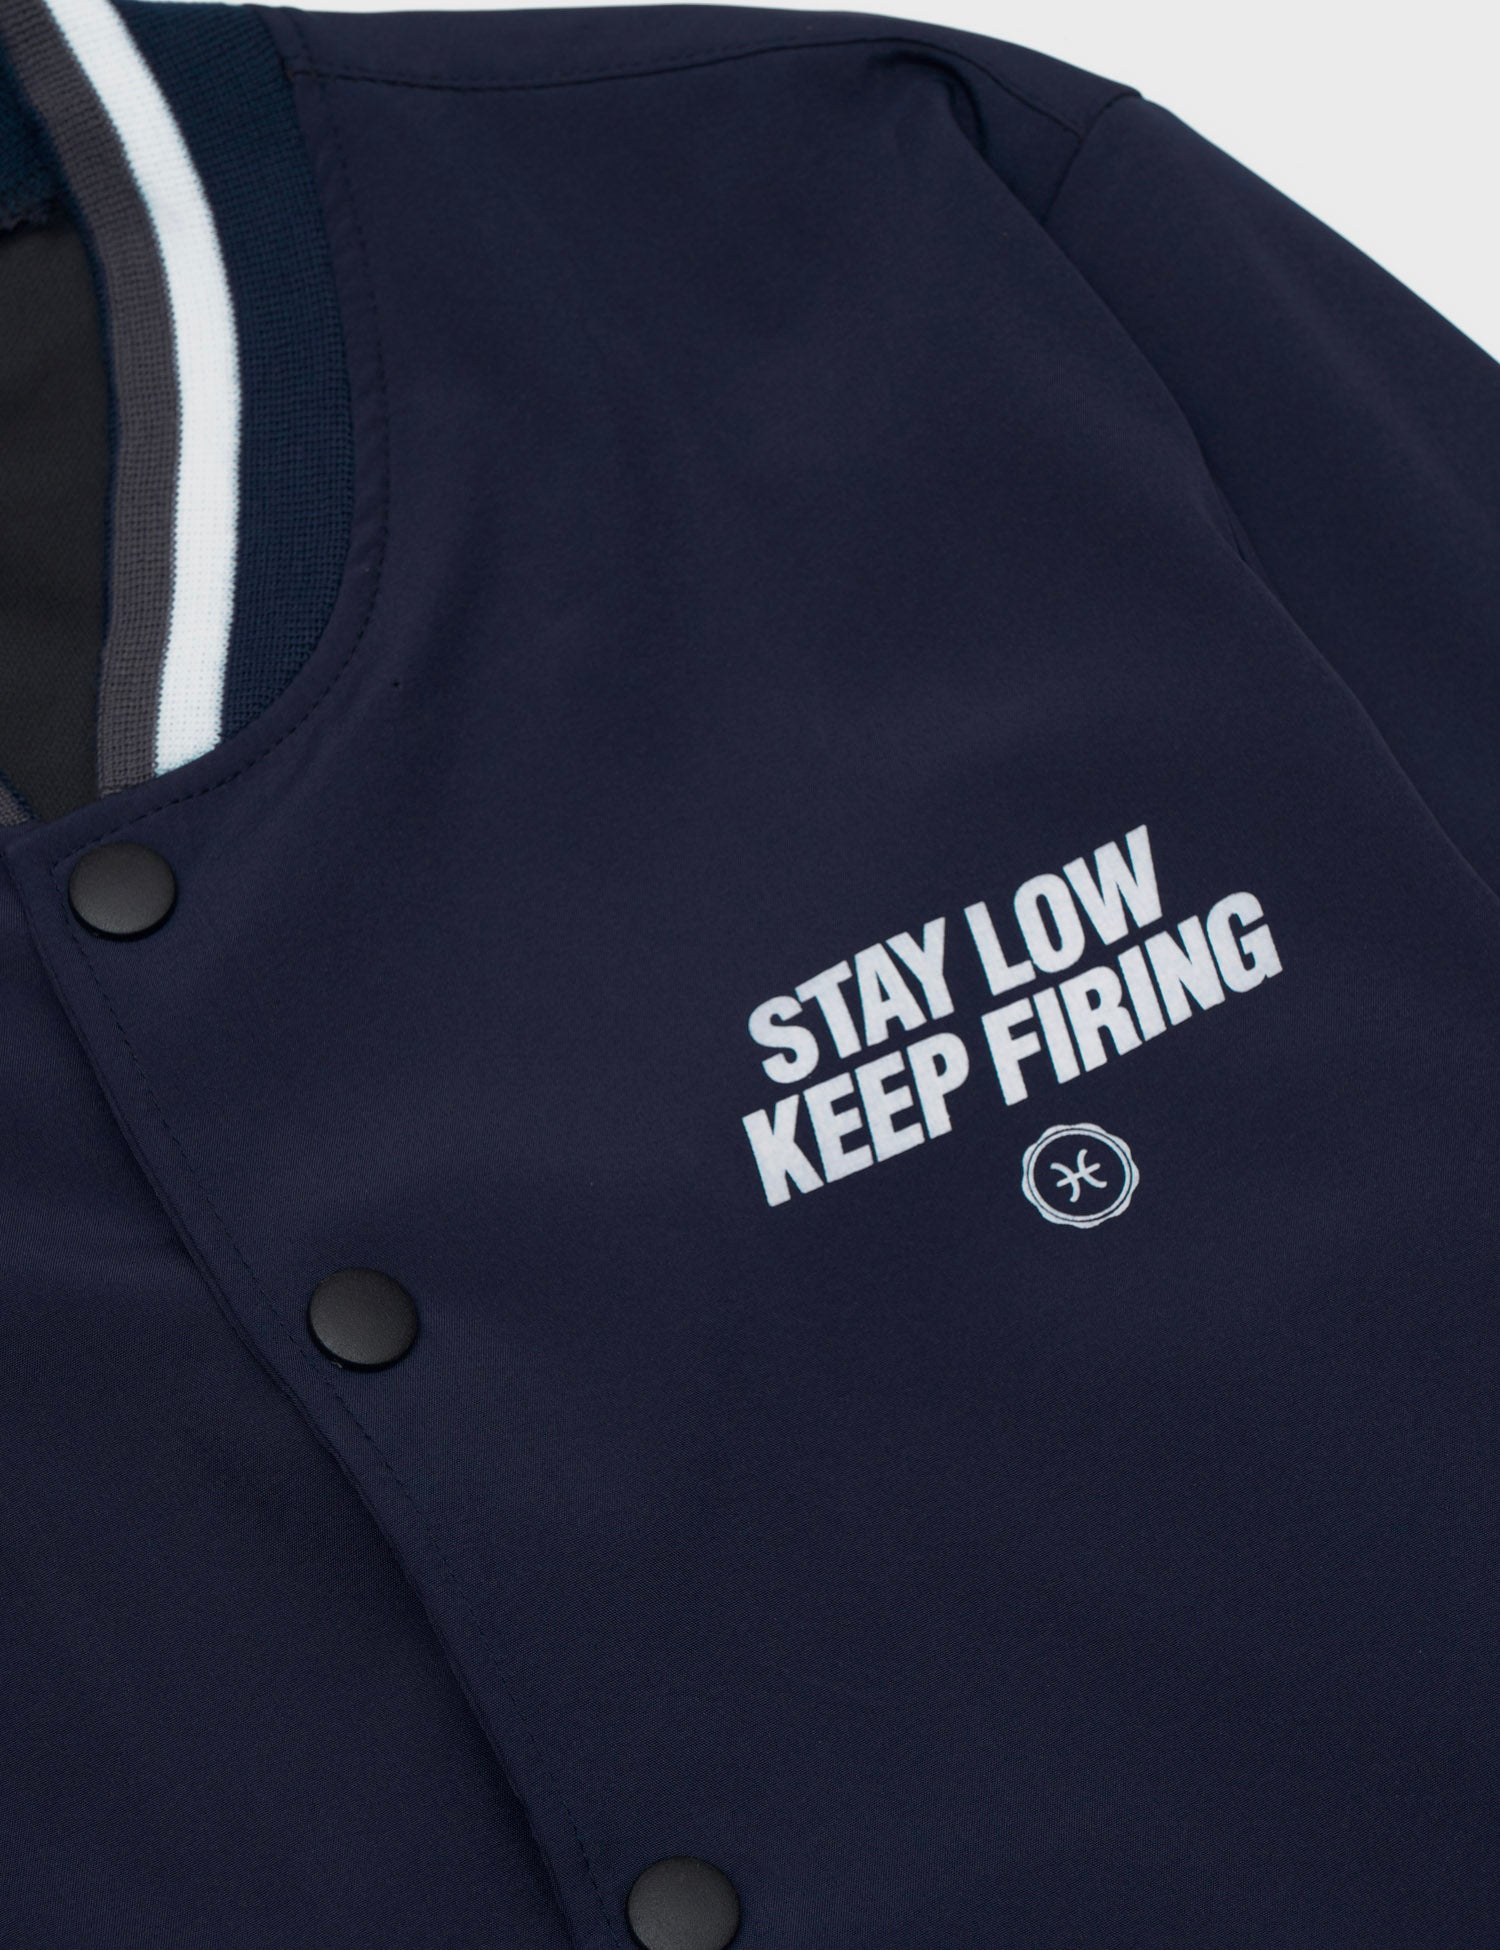 Stay Low Keep Firing Lite Varsity Jacket (Navy)